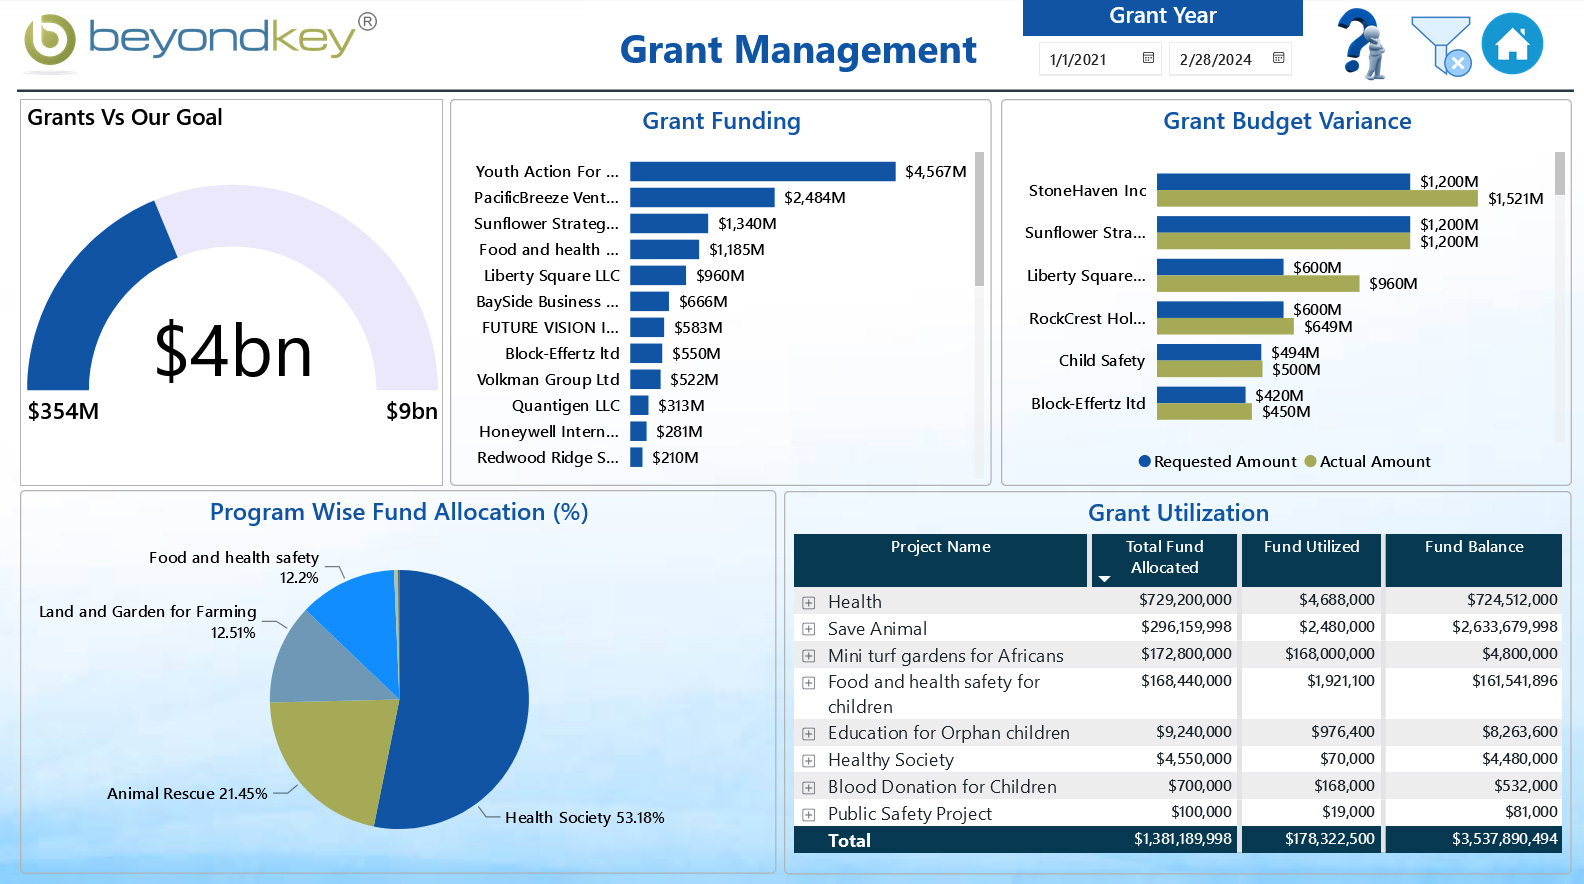 Grant Management Dashboard - Screenshot